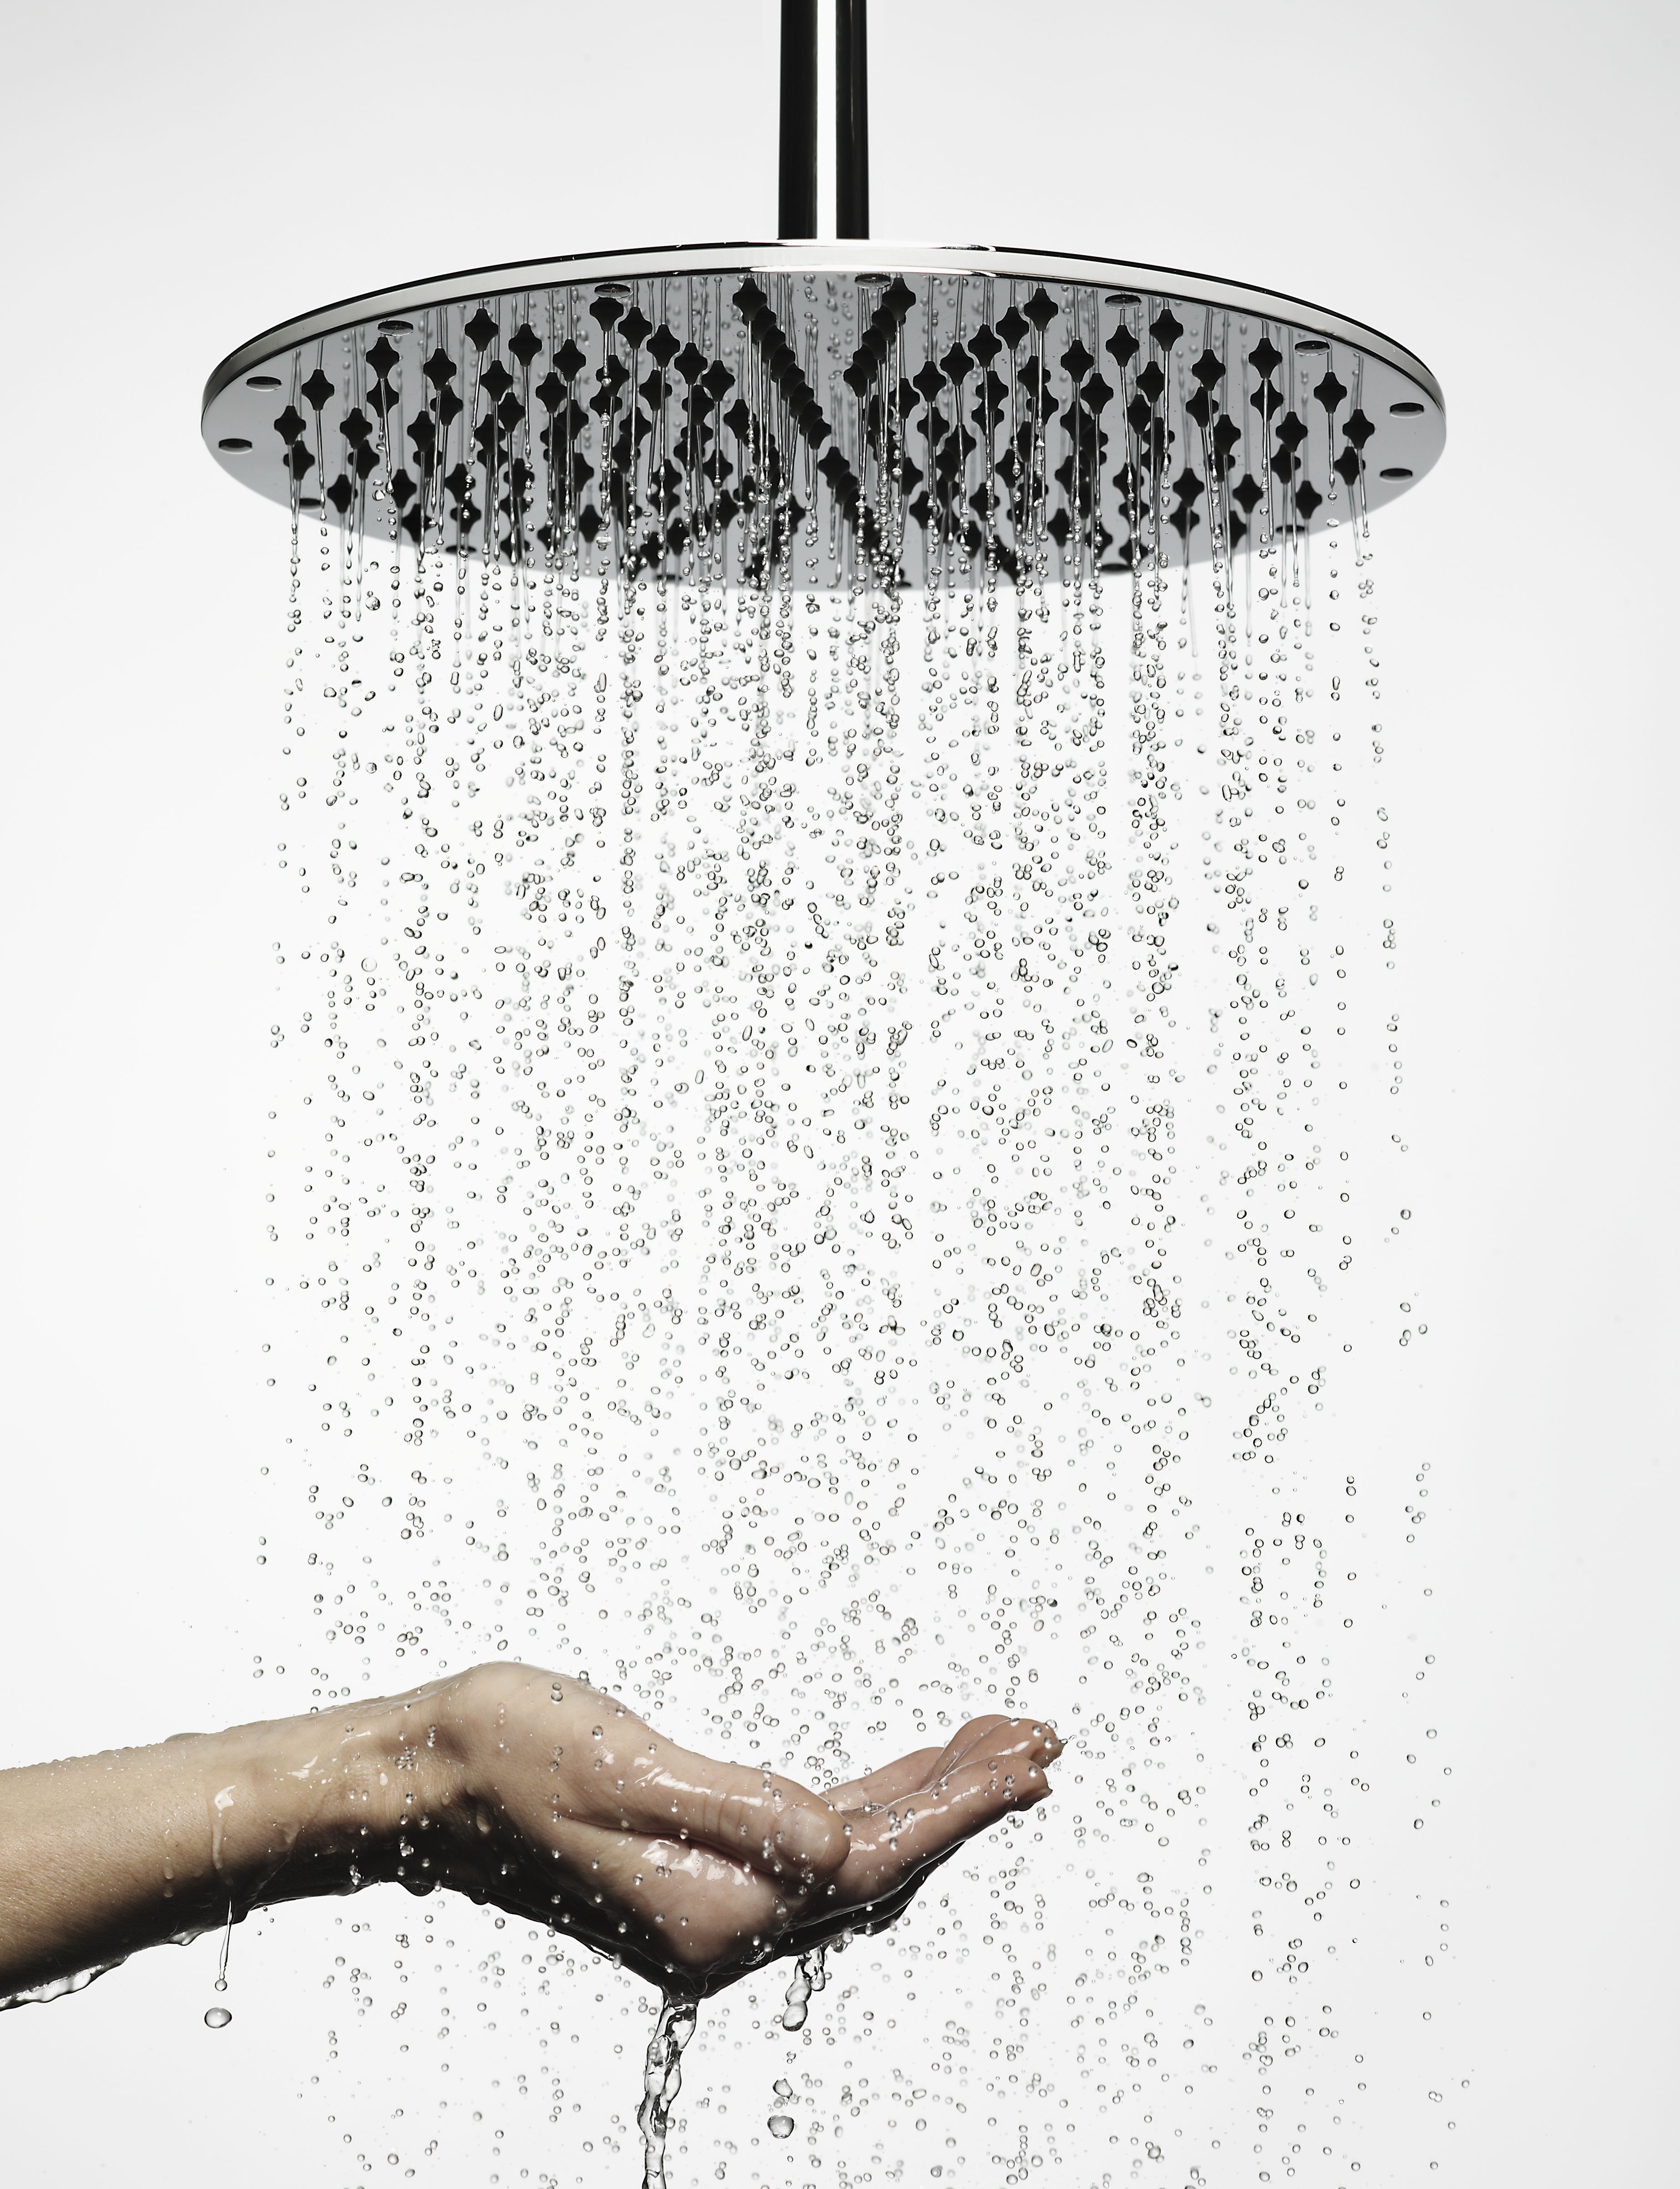 Shower Masturbation Tips That Make Your Bathroom Extra Steamy photo